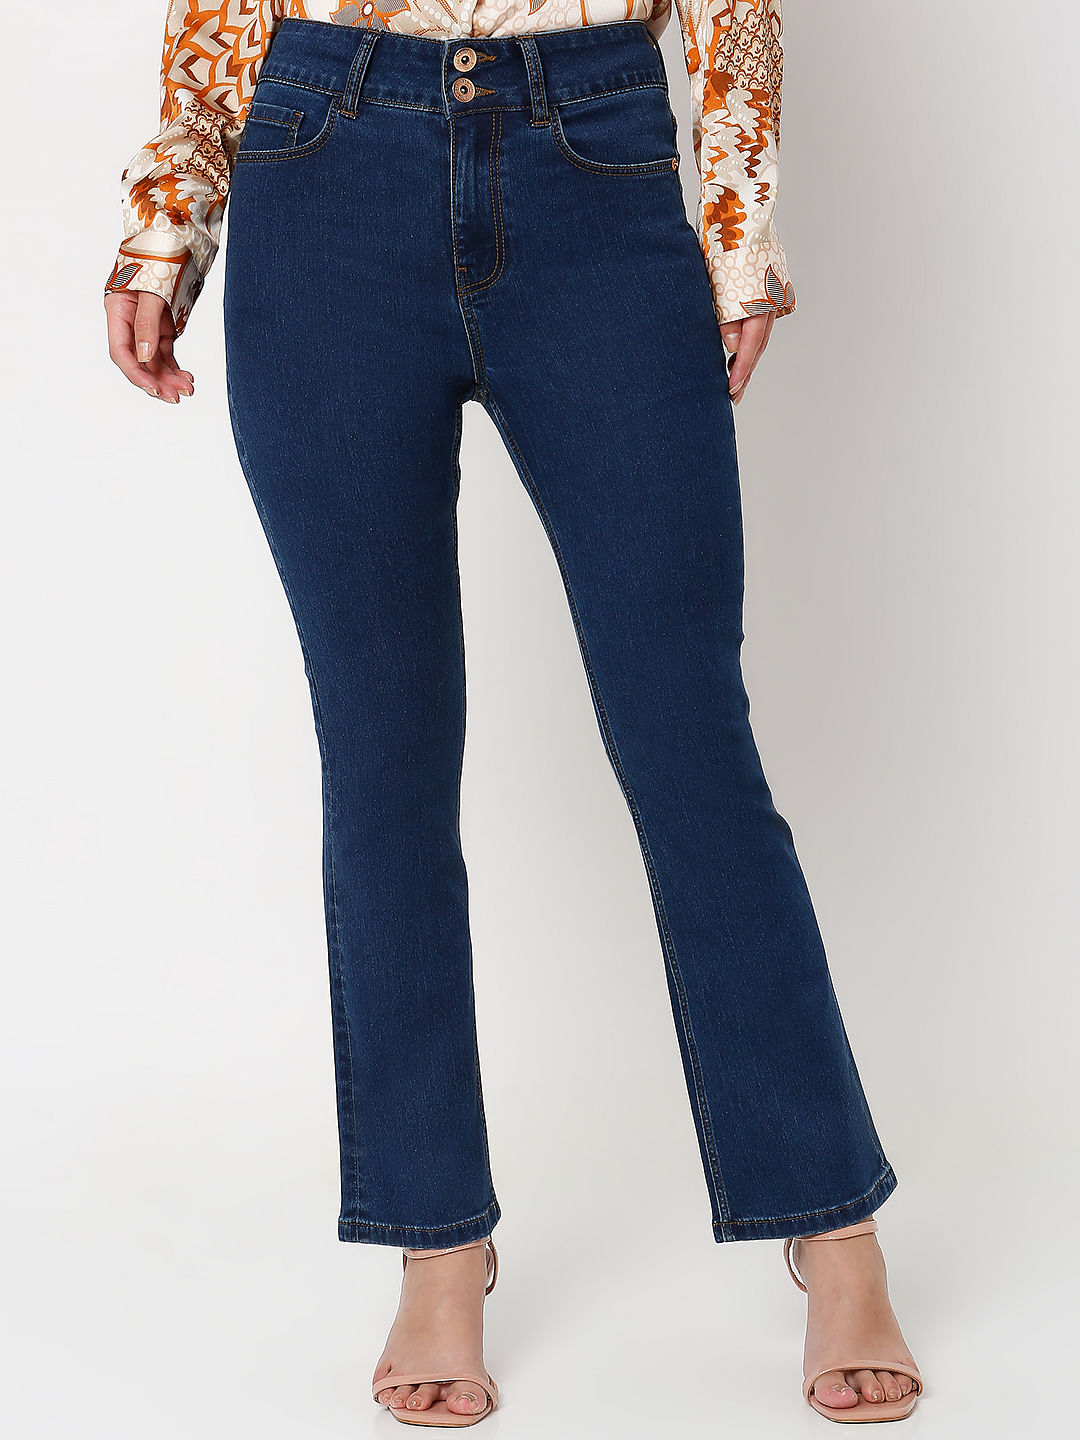 Seven 7 jeans Women's Blue Rocket Slim Low Rise Boot Cut Denim Embroidered  size | Boot cut denim, 7 jeans, Women jeans